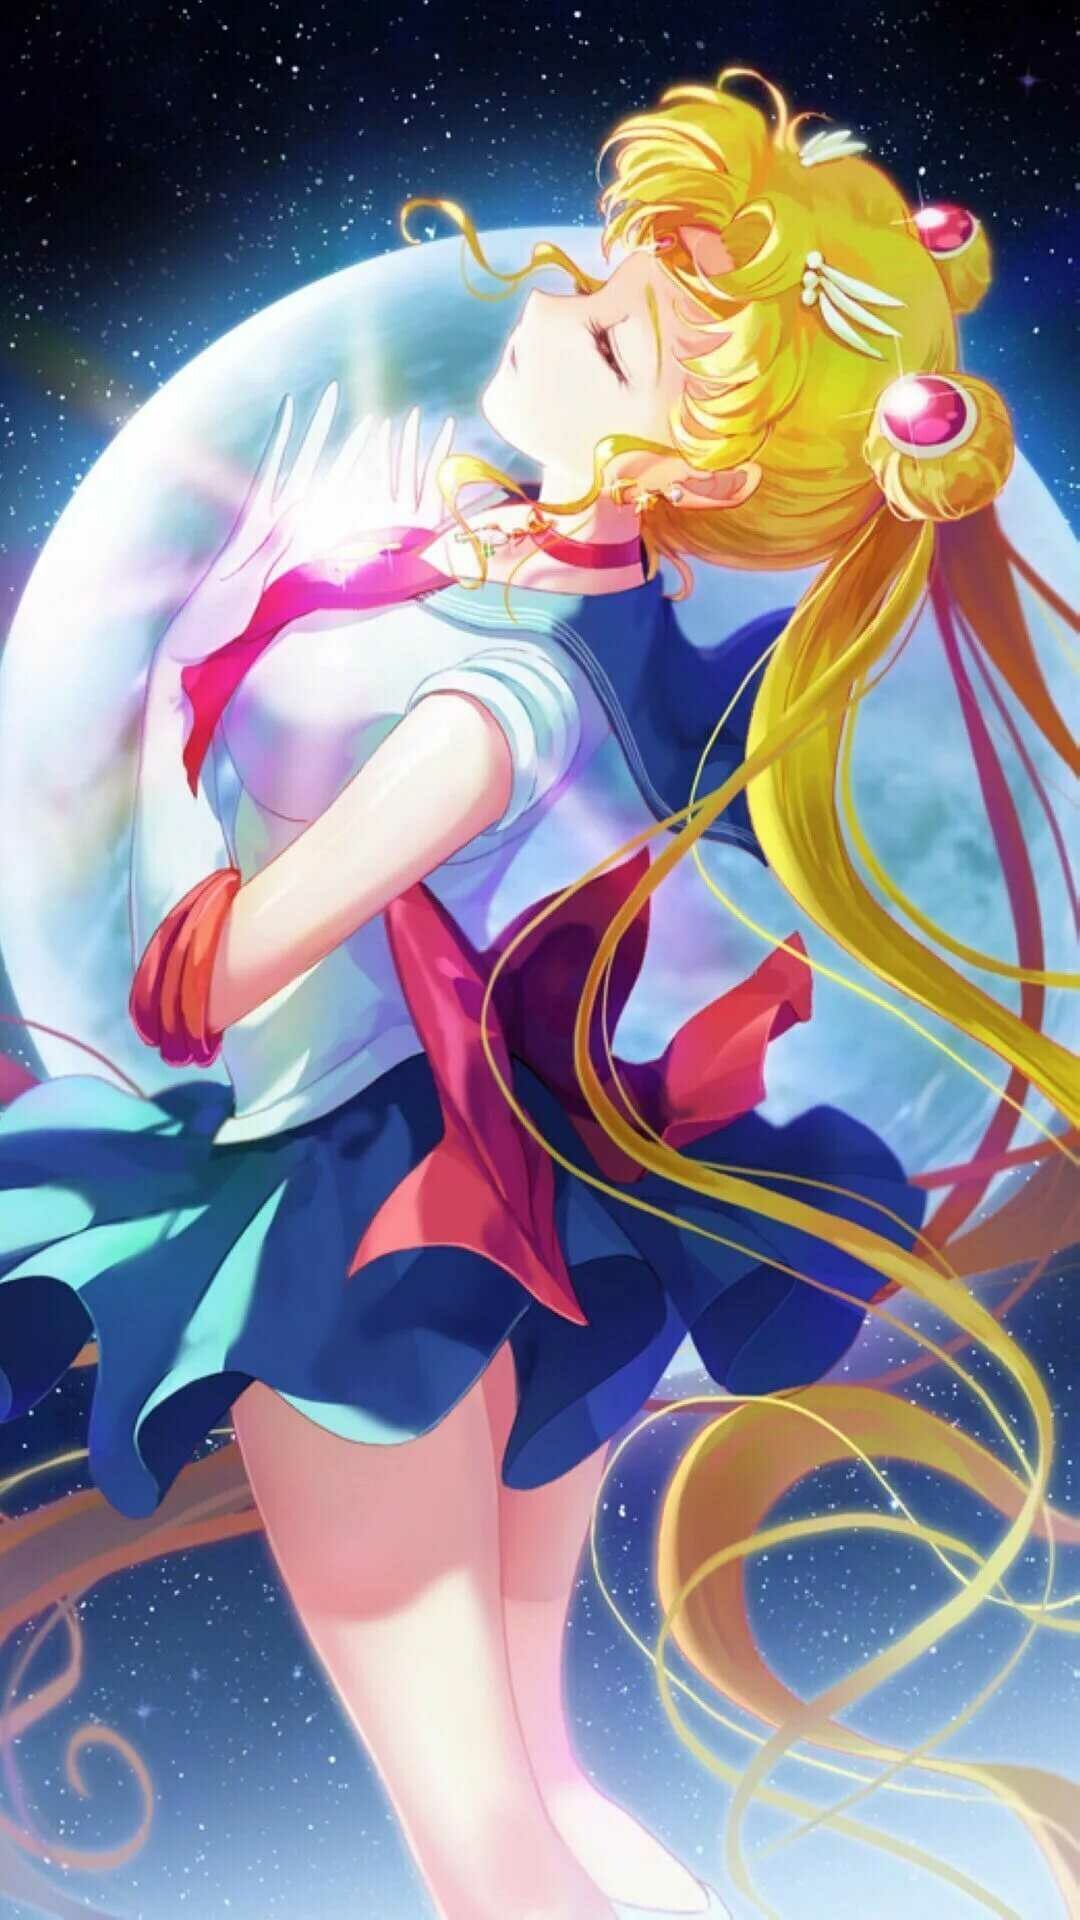 Sailor Moon: Usagi Tsukino, was reborn on Earth and re-awoke as the leader of the Sailor Senshi. 1080x1920 Full HD Wallpaper.